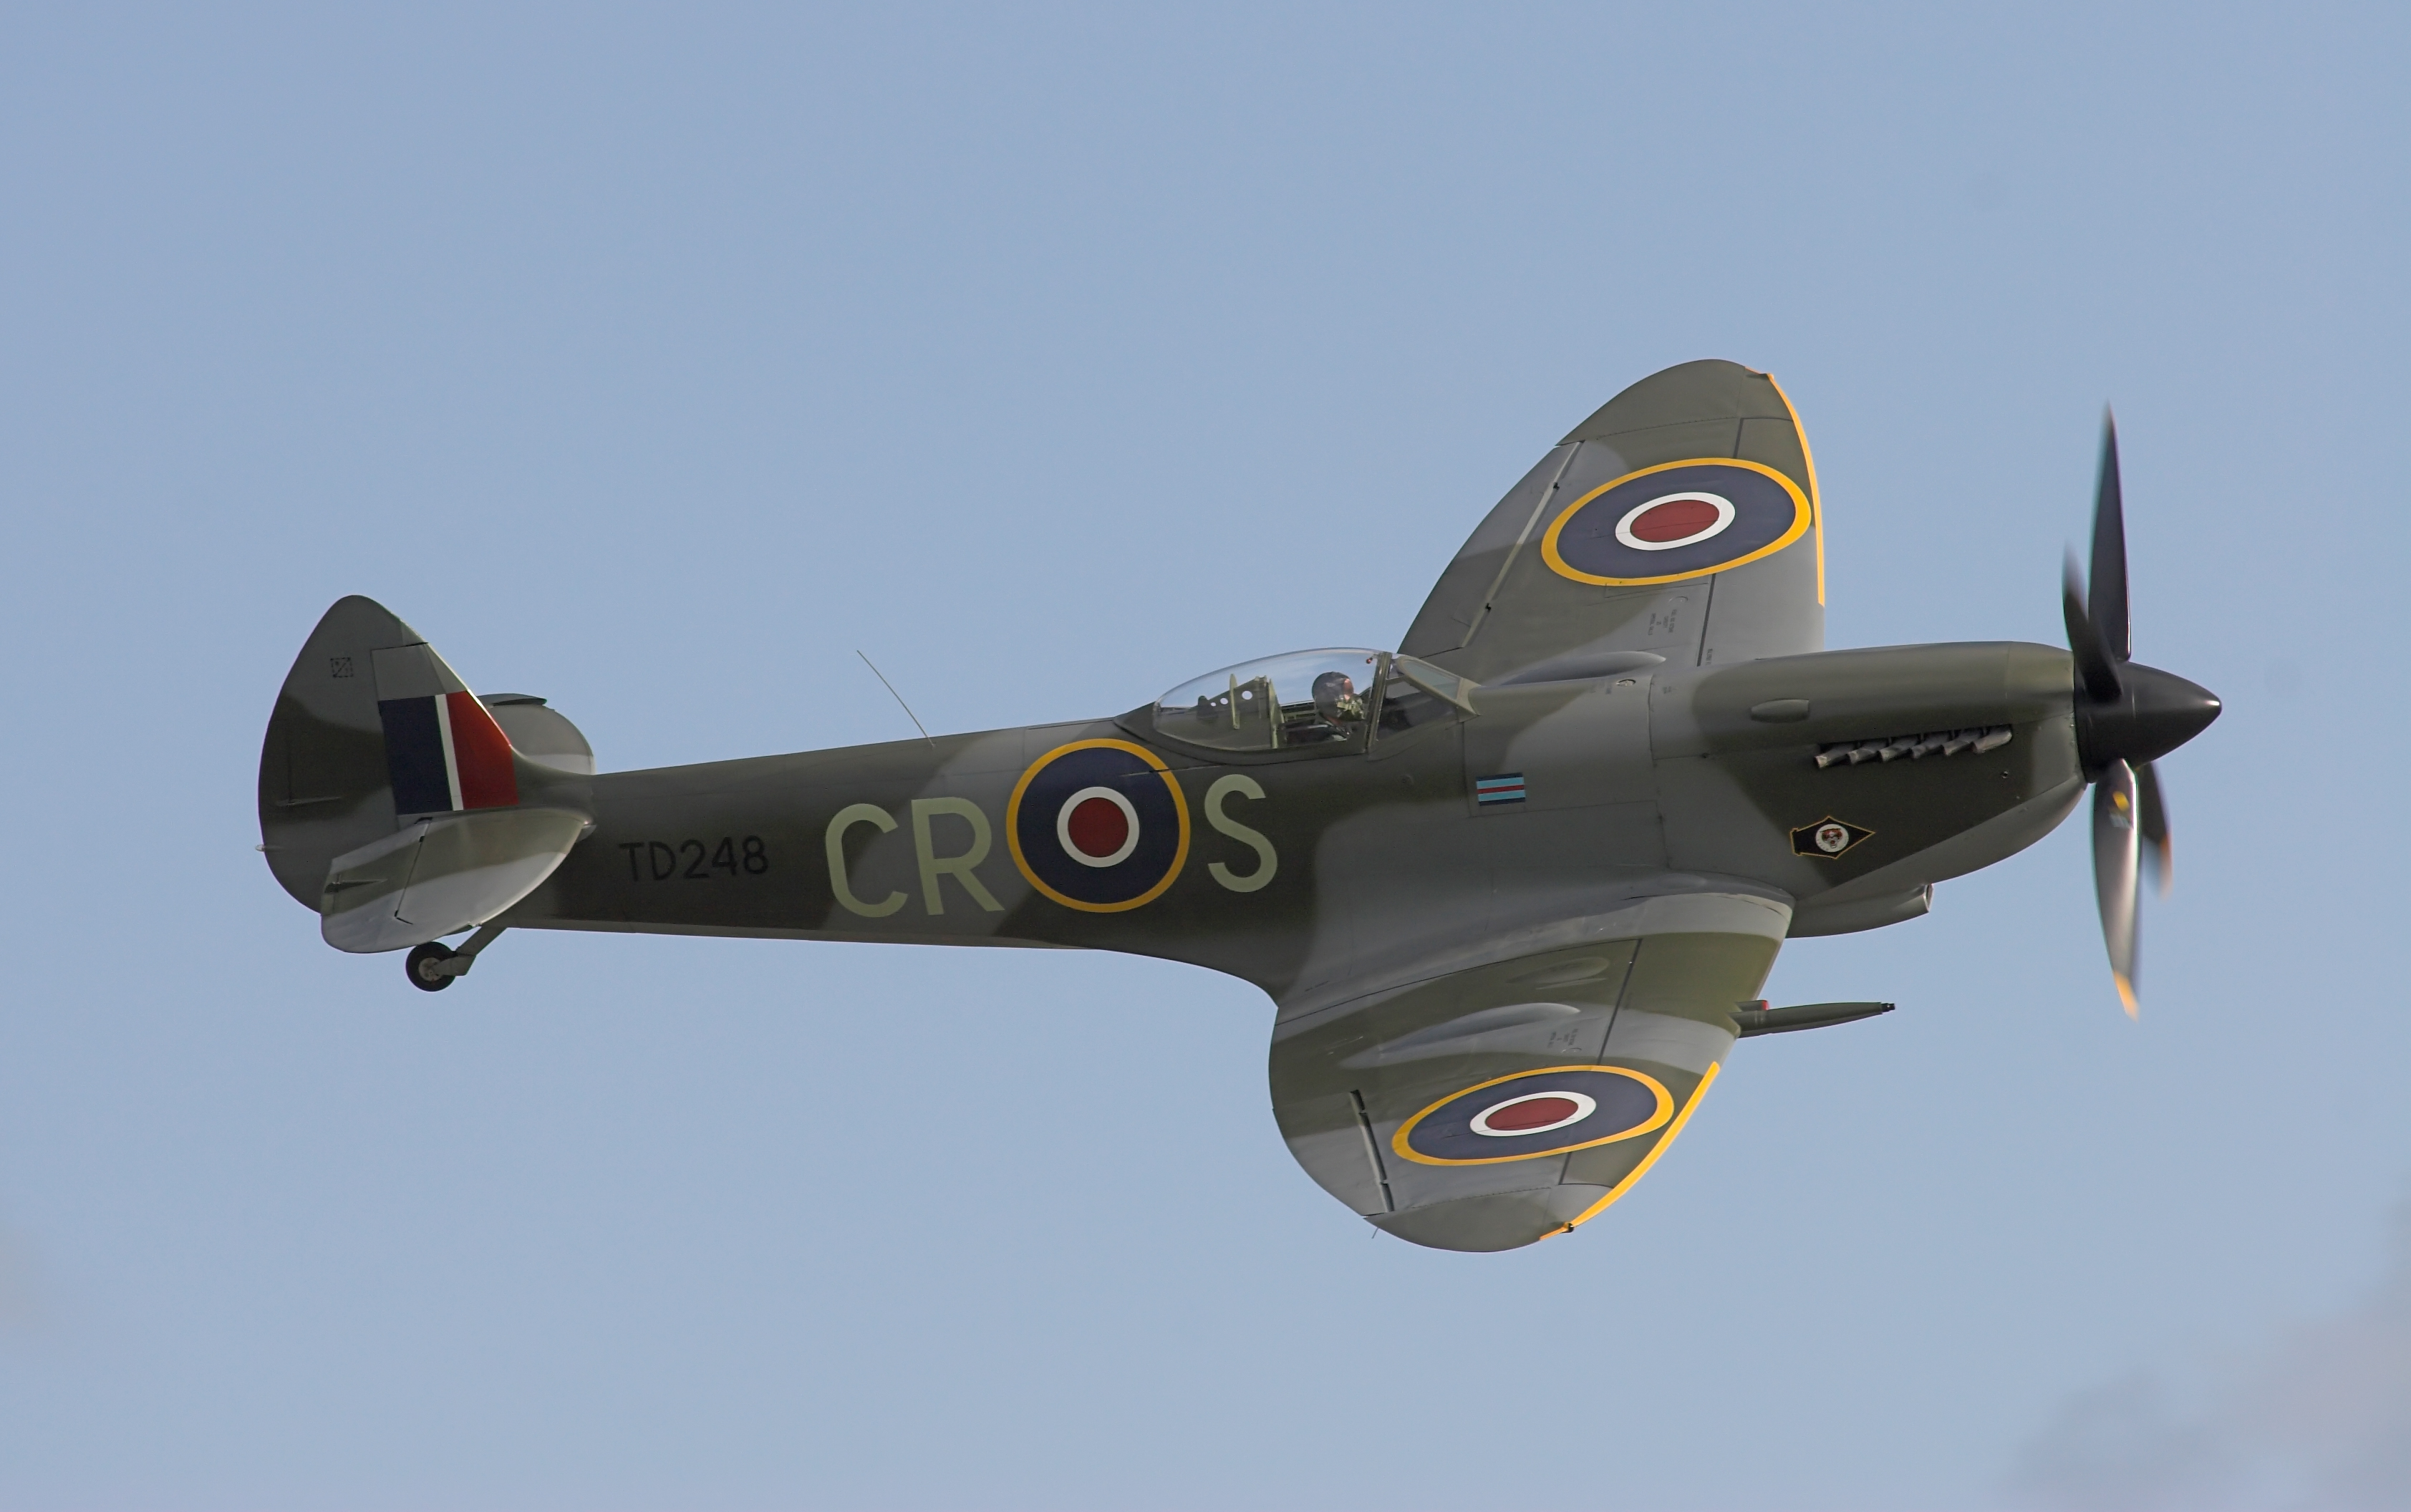 Supermarine Spitfire Backgrounds on Wallpapers Vista